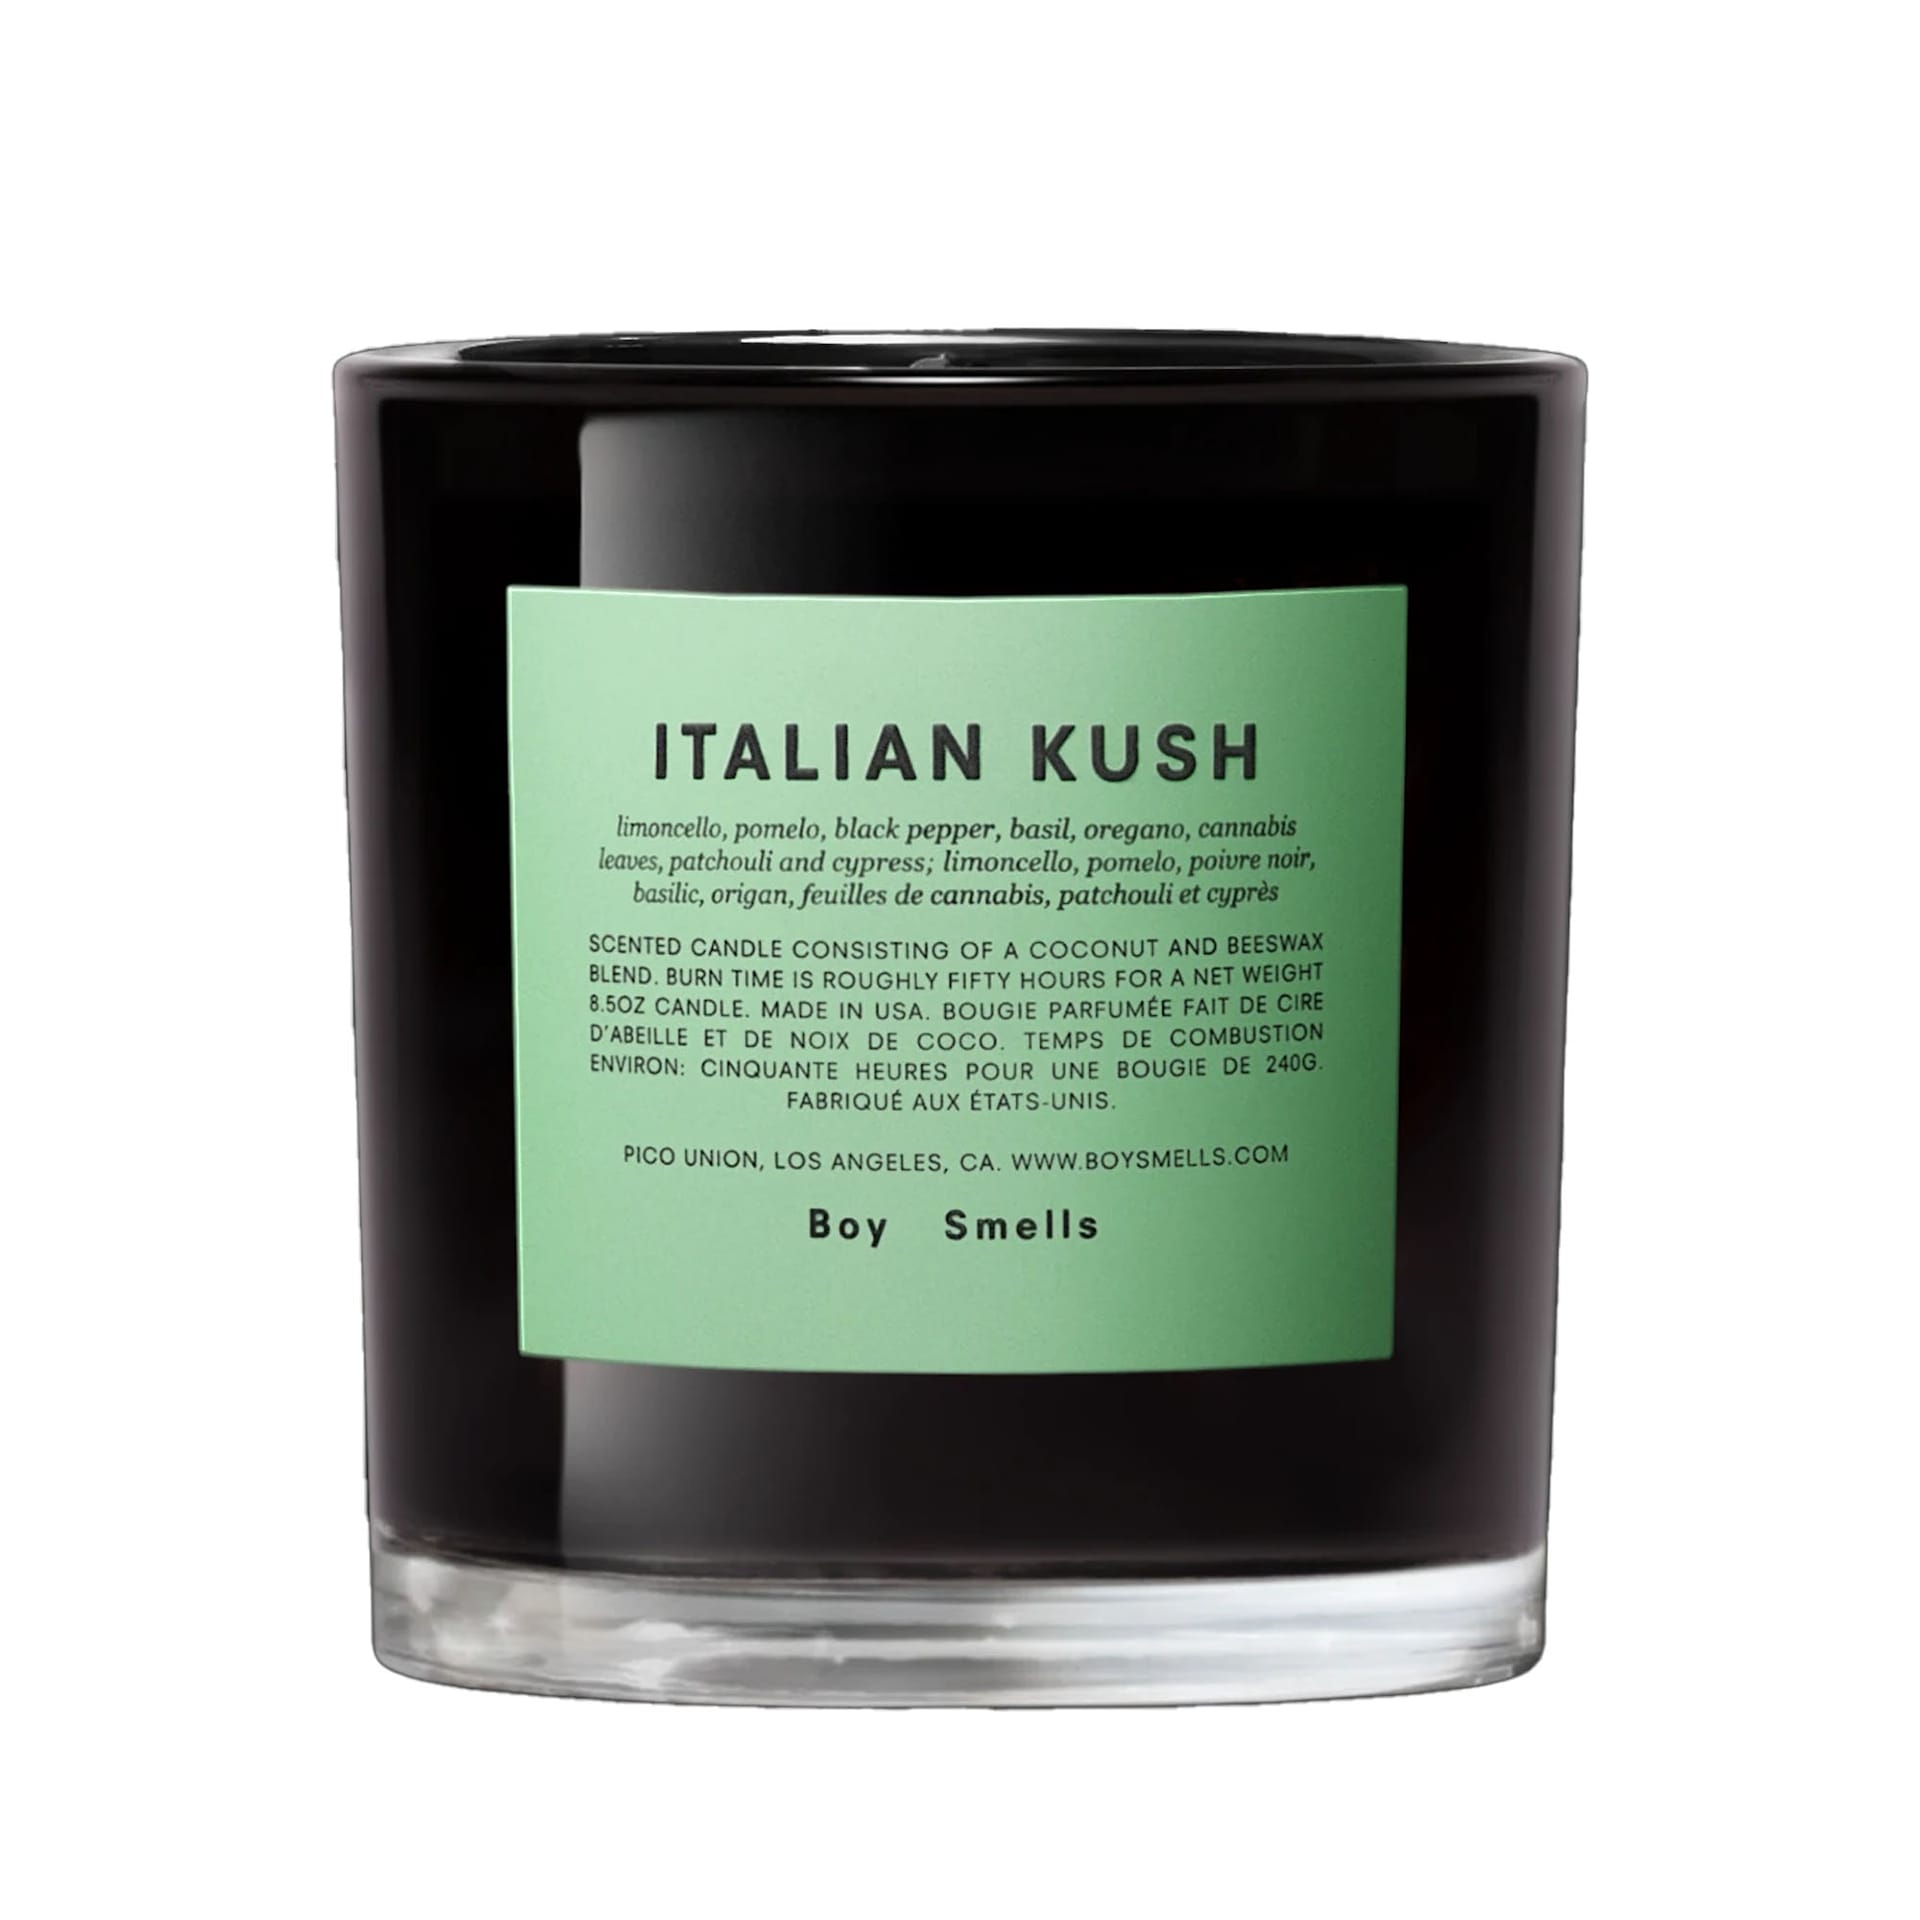 Italian Kush Scented Candle - Boy Smells - NO GA